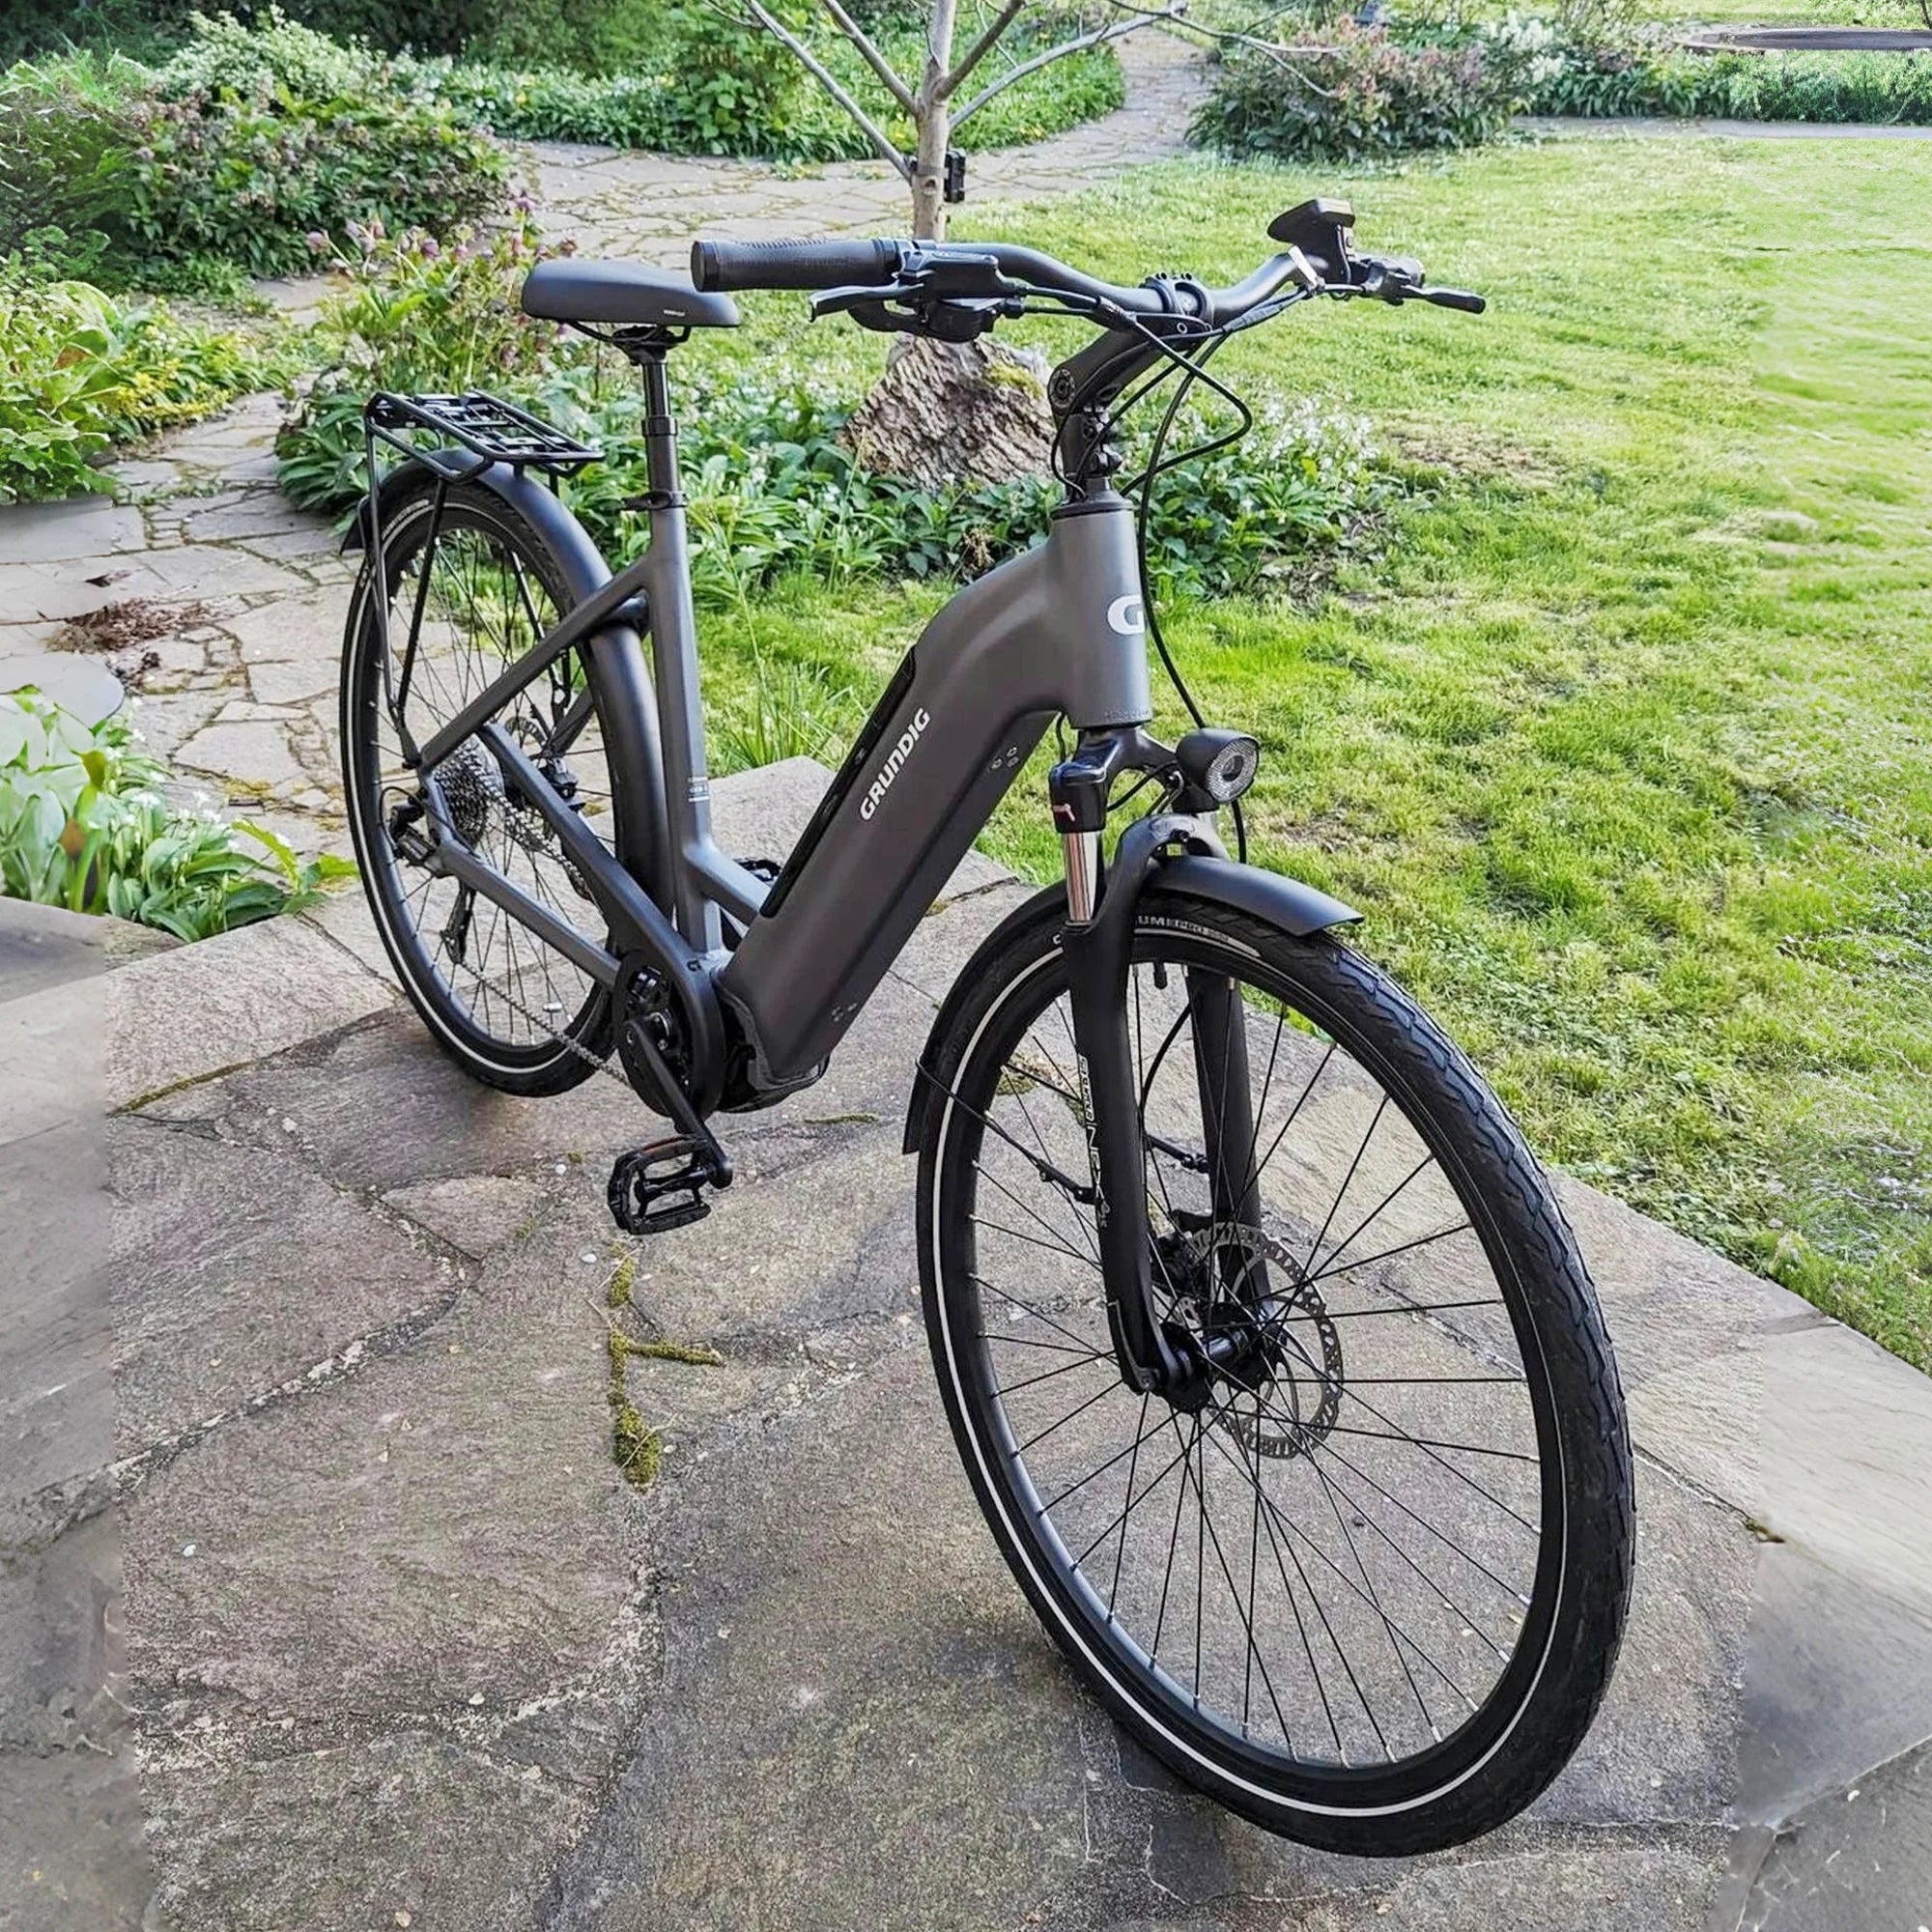 Bicicletta elettrica GRUNDIG GCB-1 nera